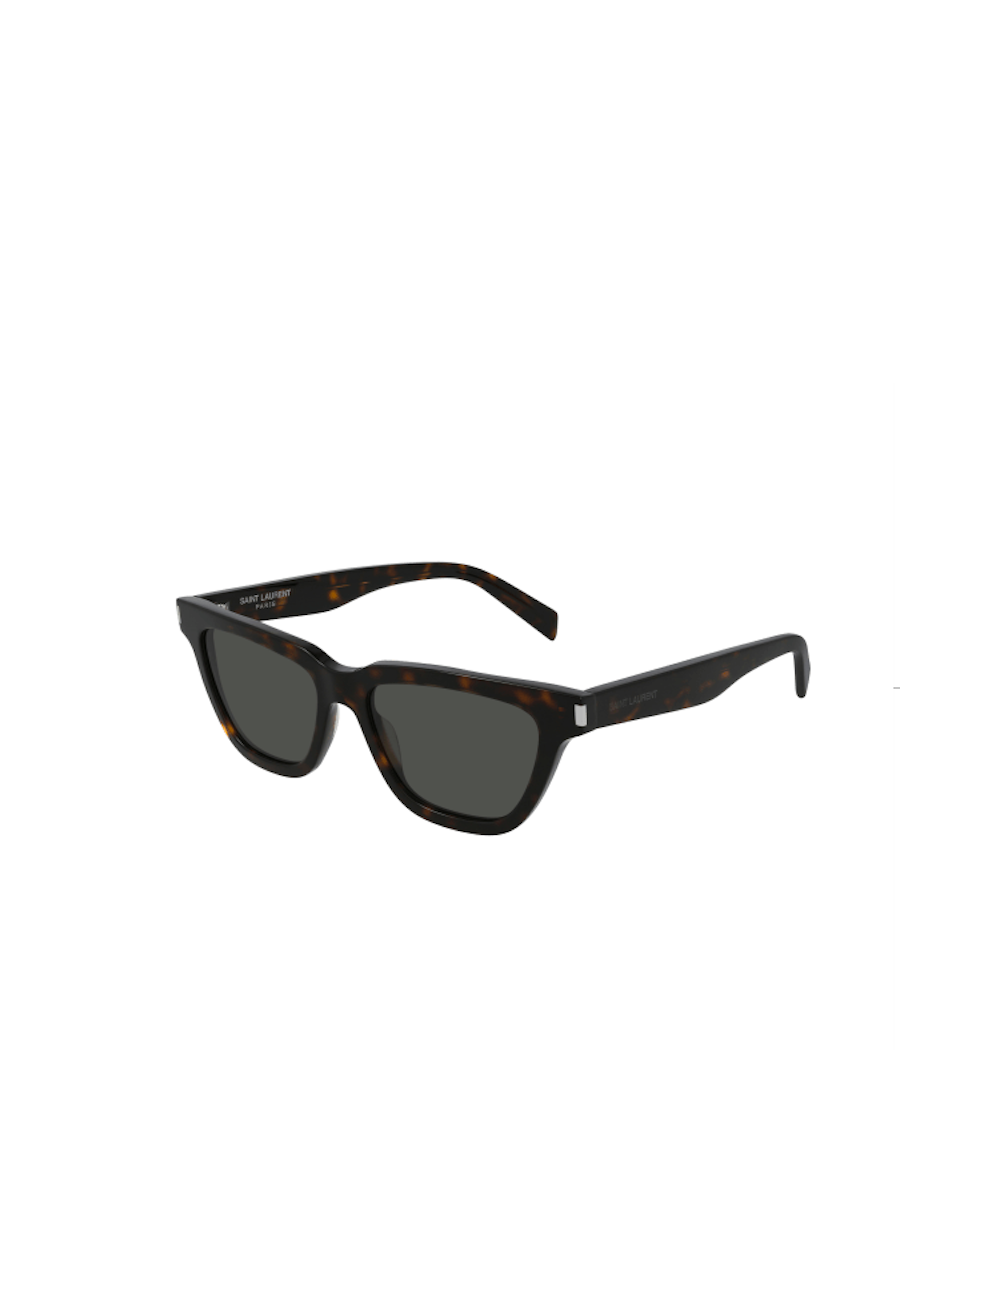 SL 462 Sulpice Cat Eye Sunglasses in Black - Saint Laurent